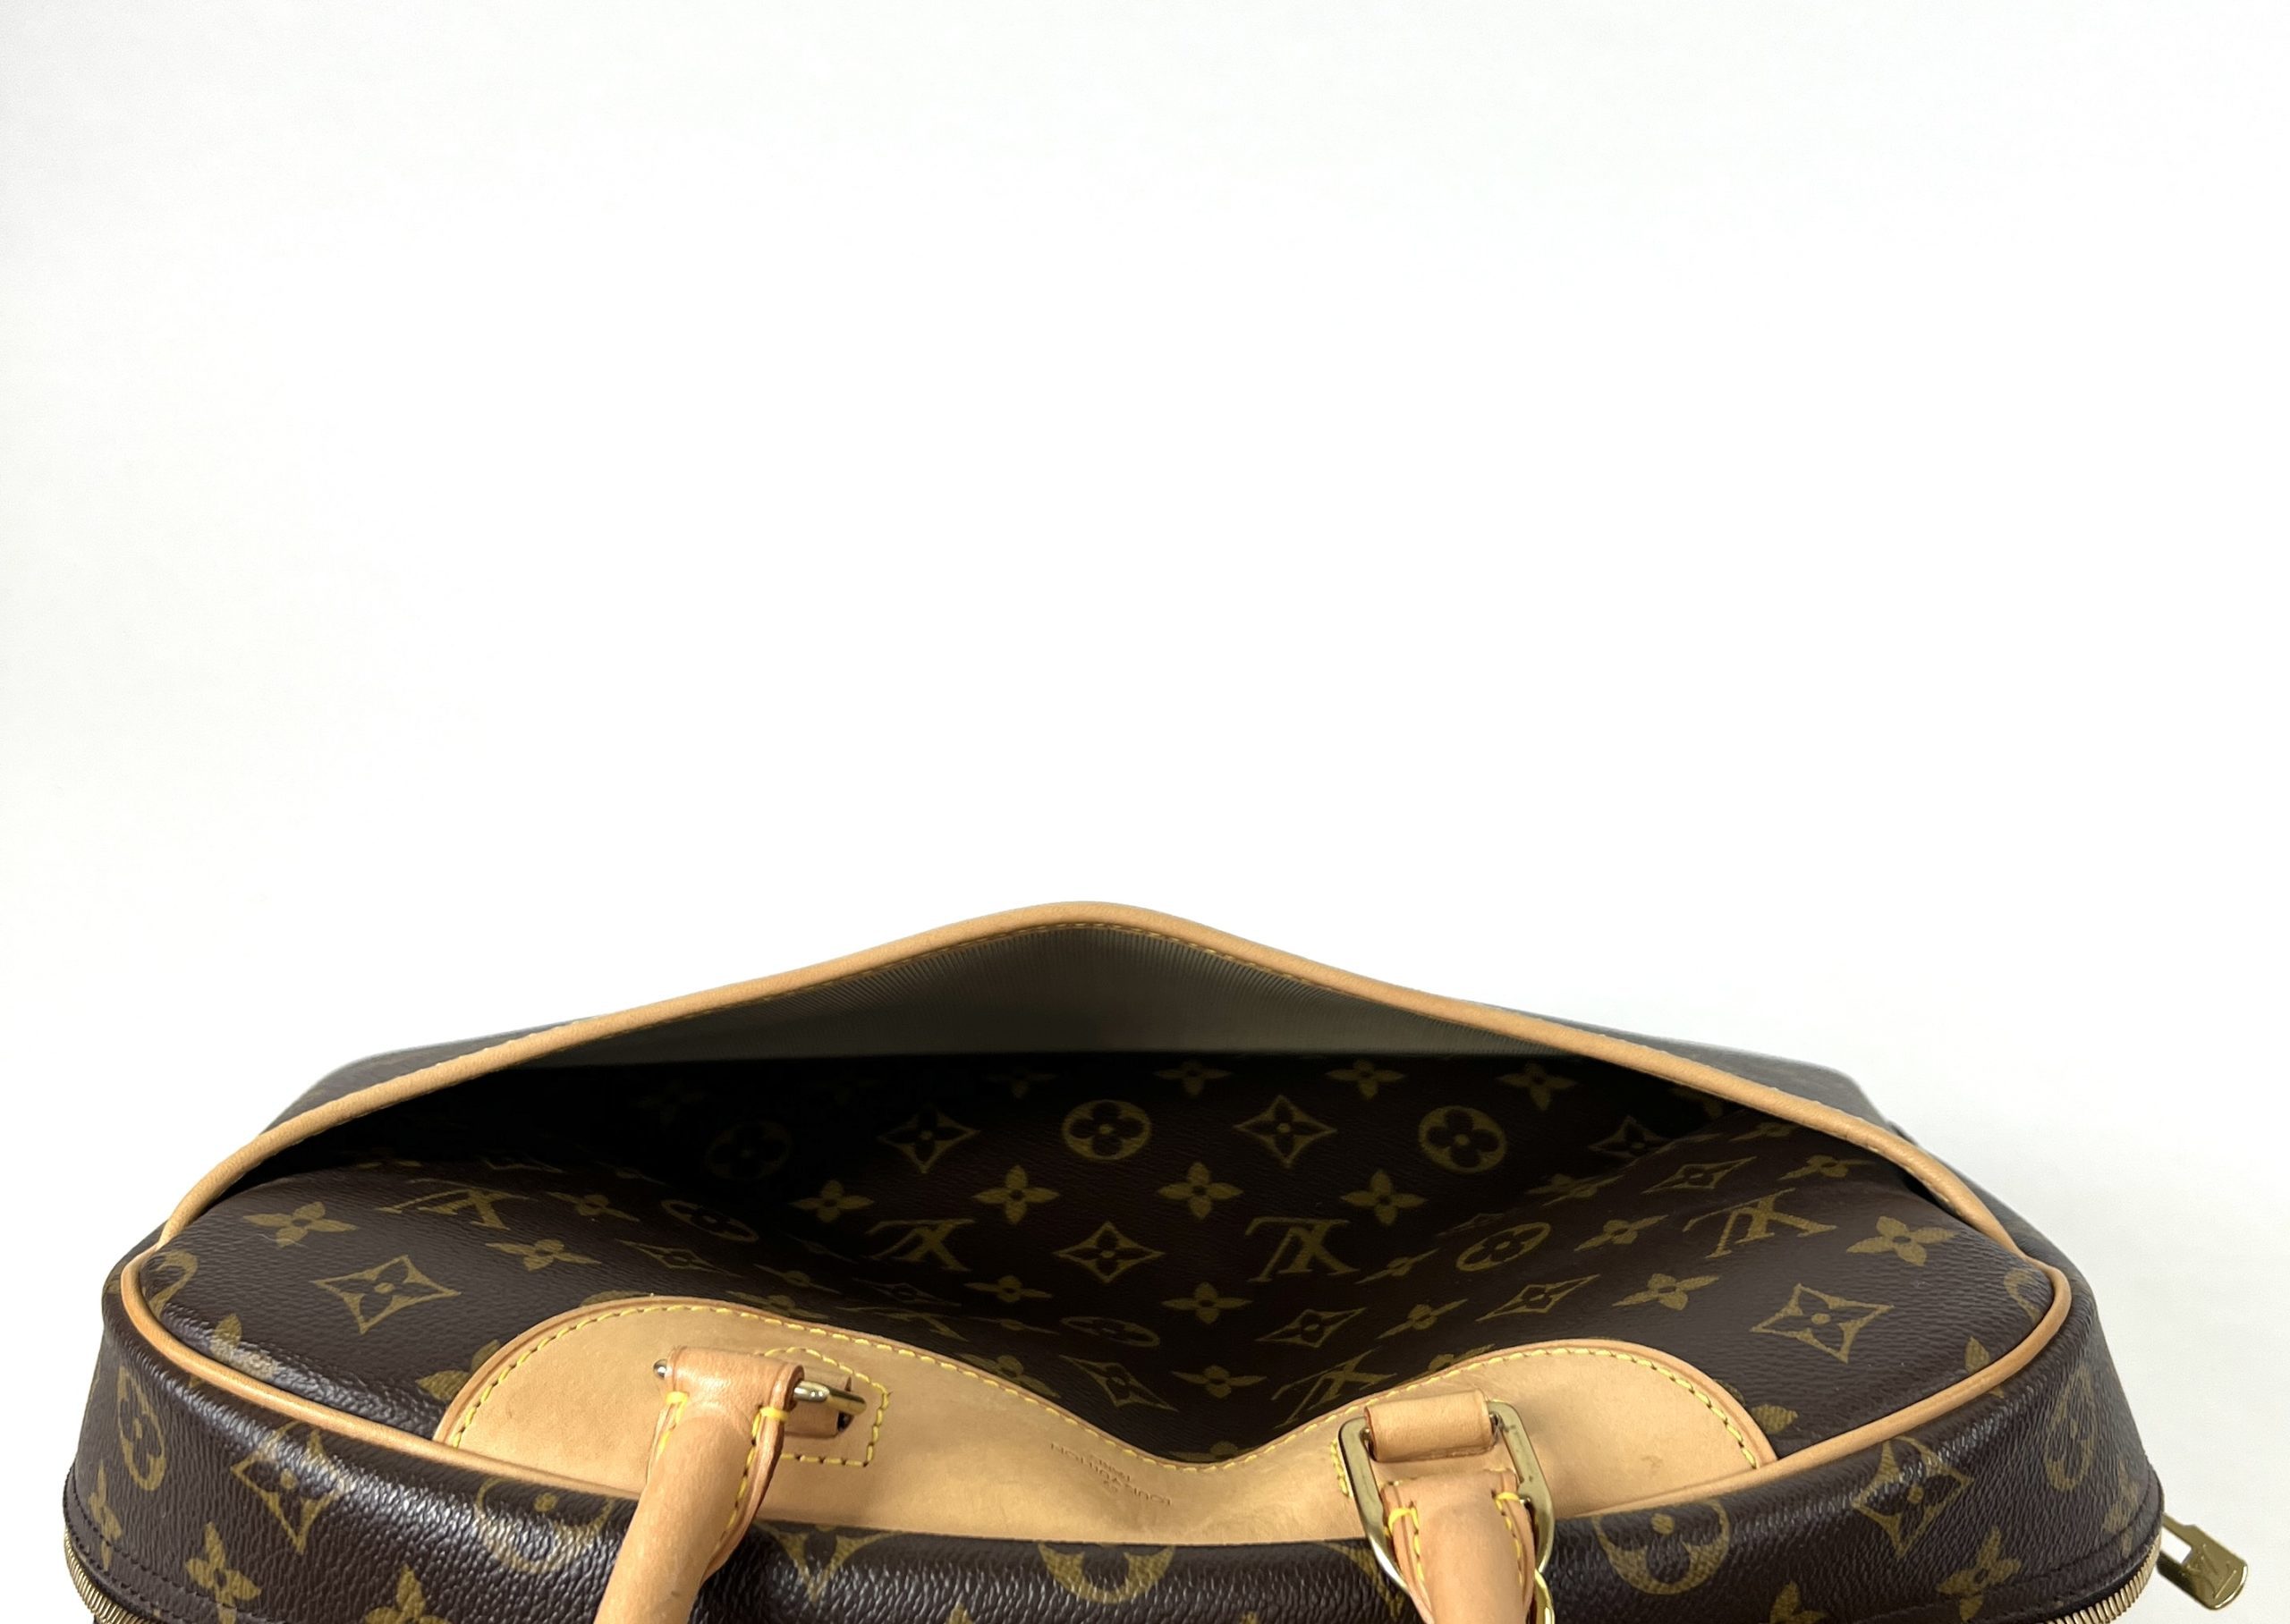 Louis Vuitton Louis Vuitton Deauville Bags & Handbags for Women, Authenticity Guaranteed